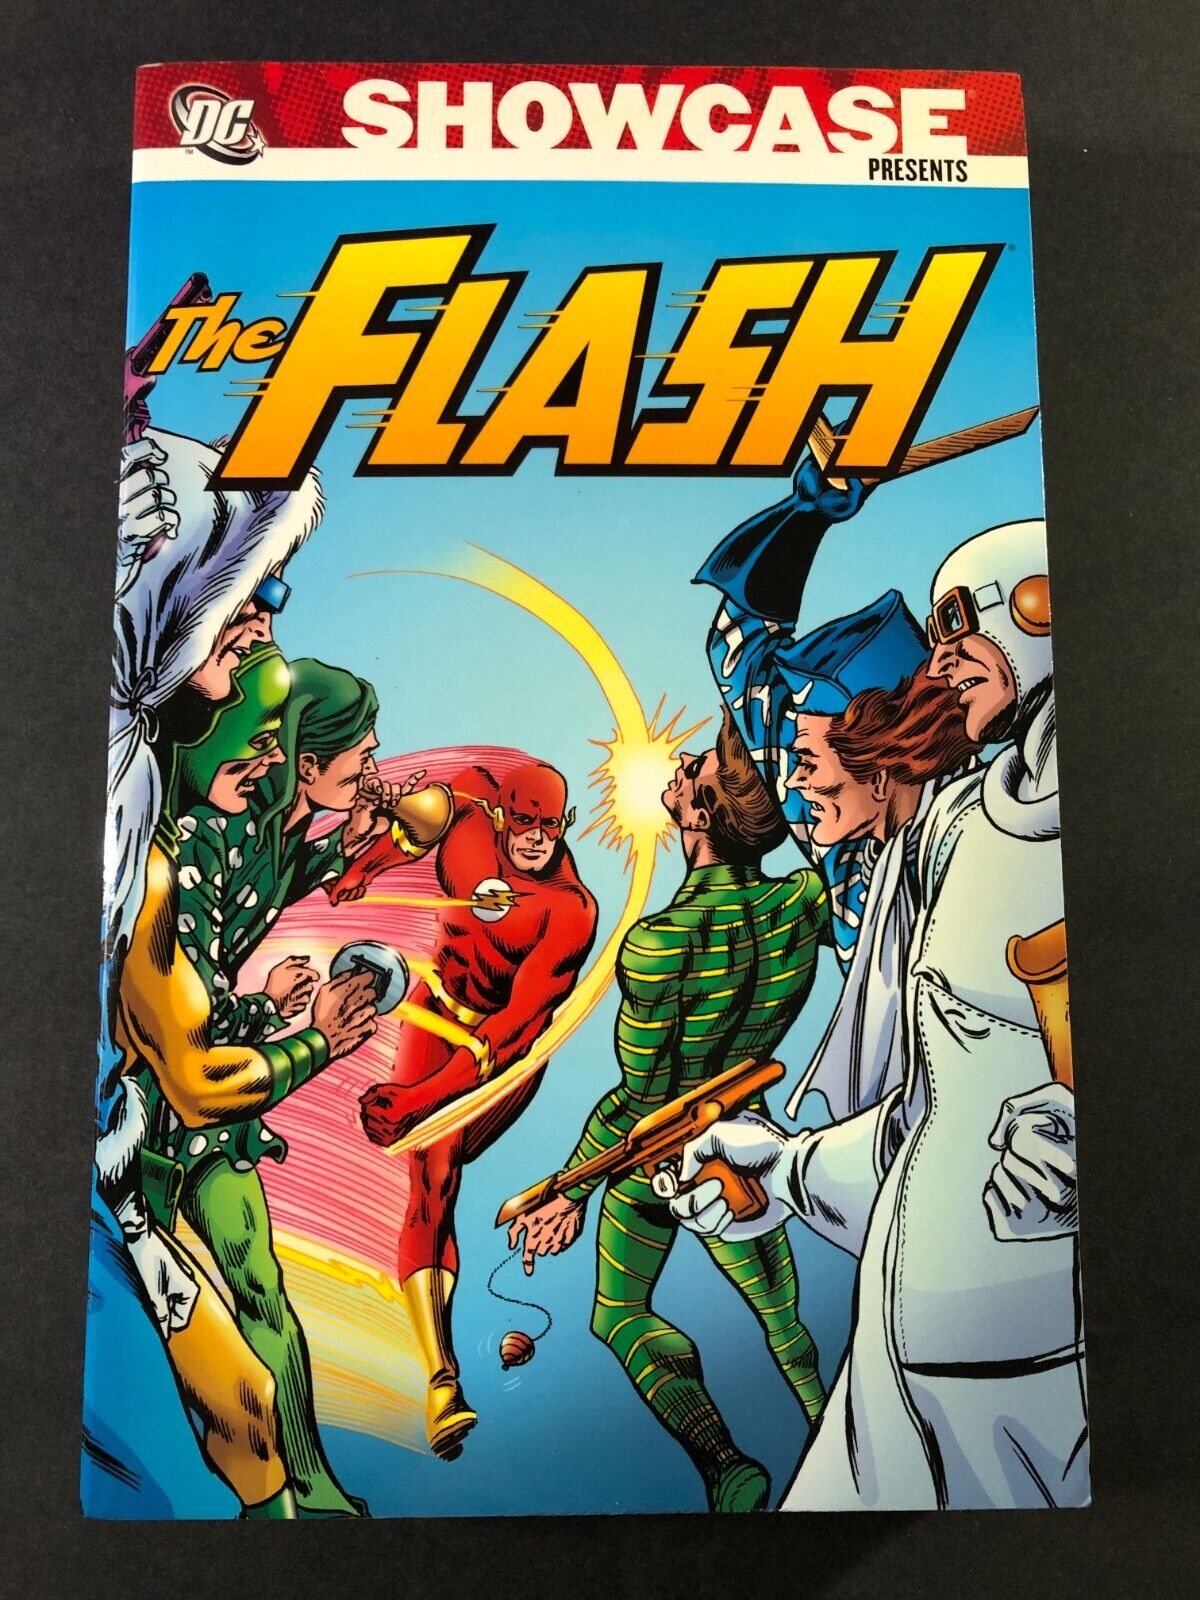 Showcase Presents The Flash TP Vol 3 by Gardner Fox